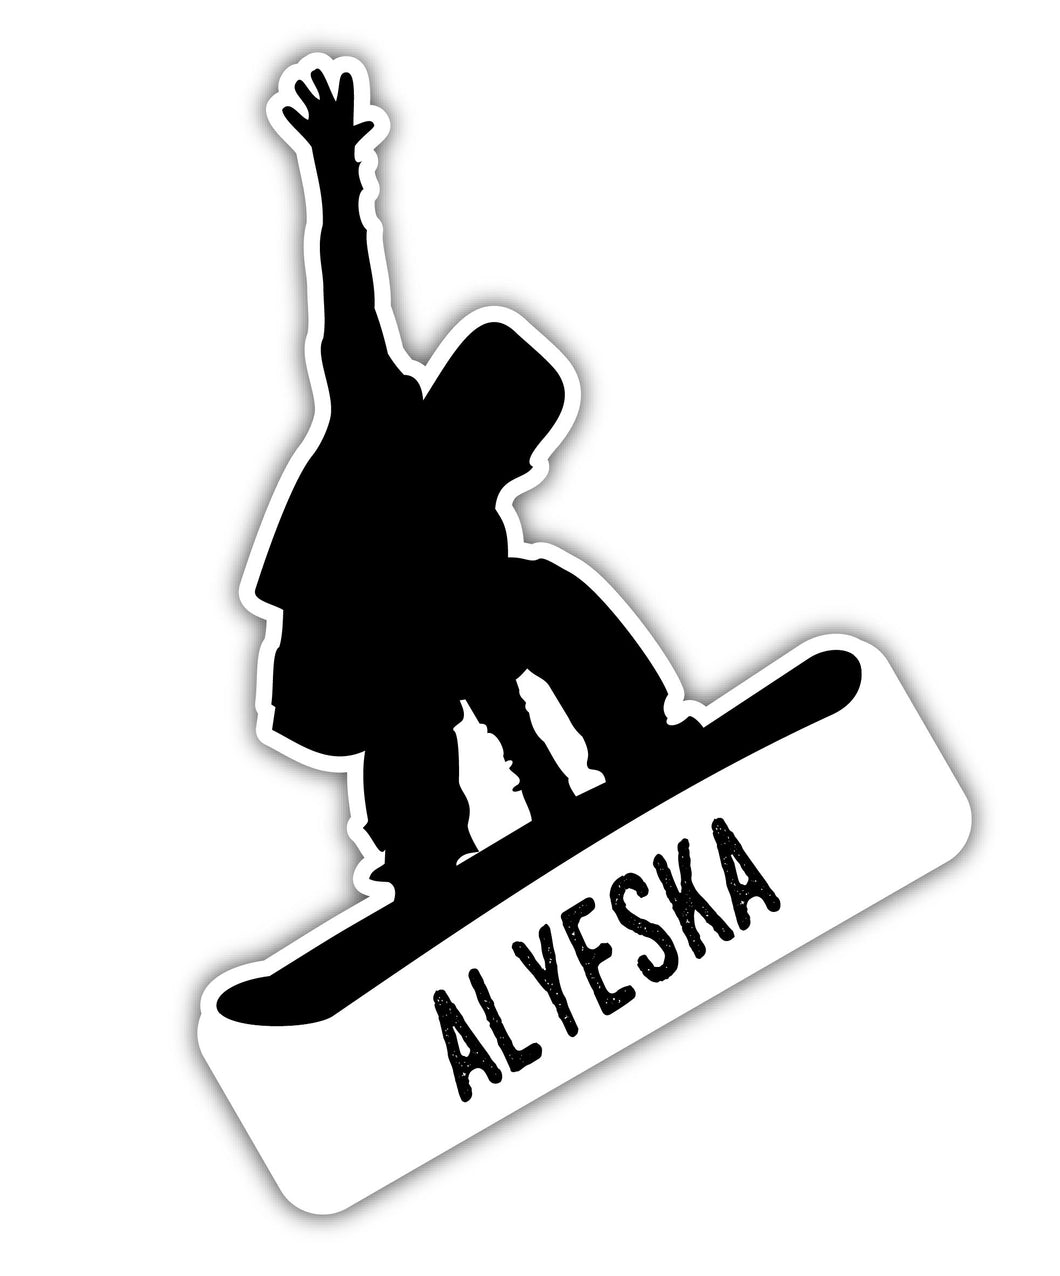 Alyeska Alaska Ski Adventures Souvenir Approximately 5 x 2.5-Inch Vinyl Decal Sticker Goggle Design